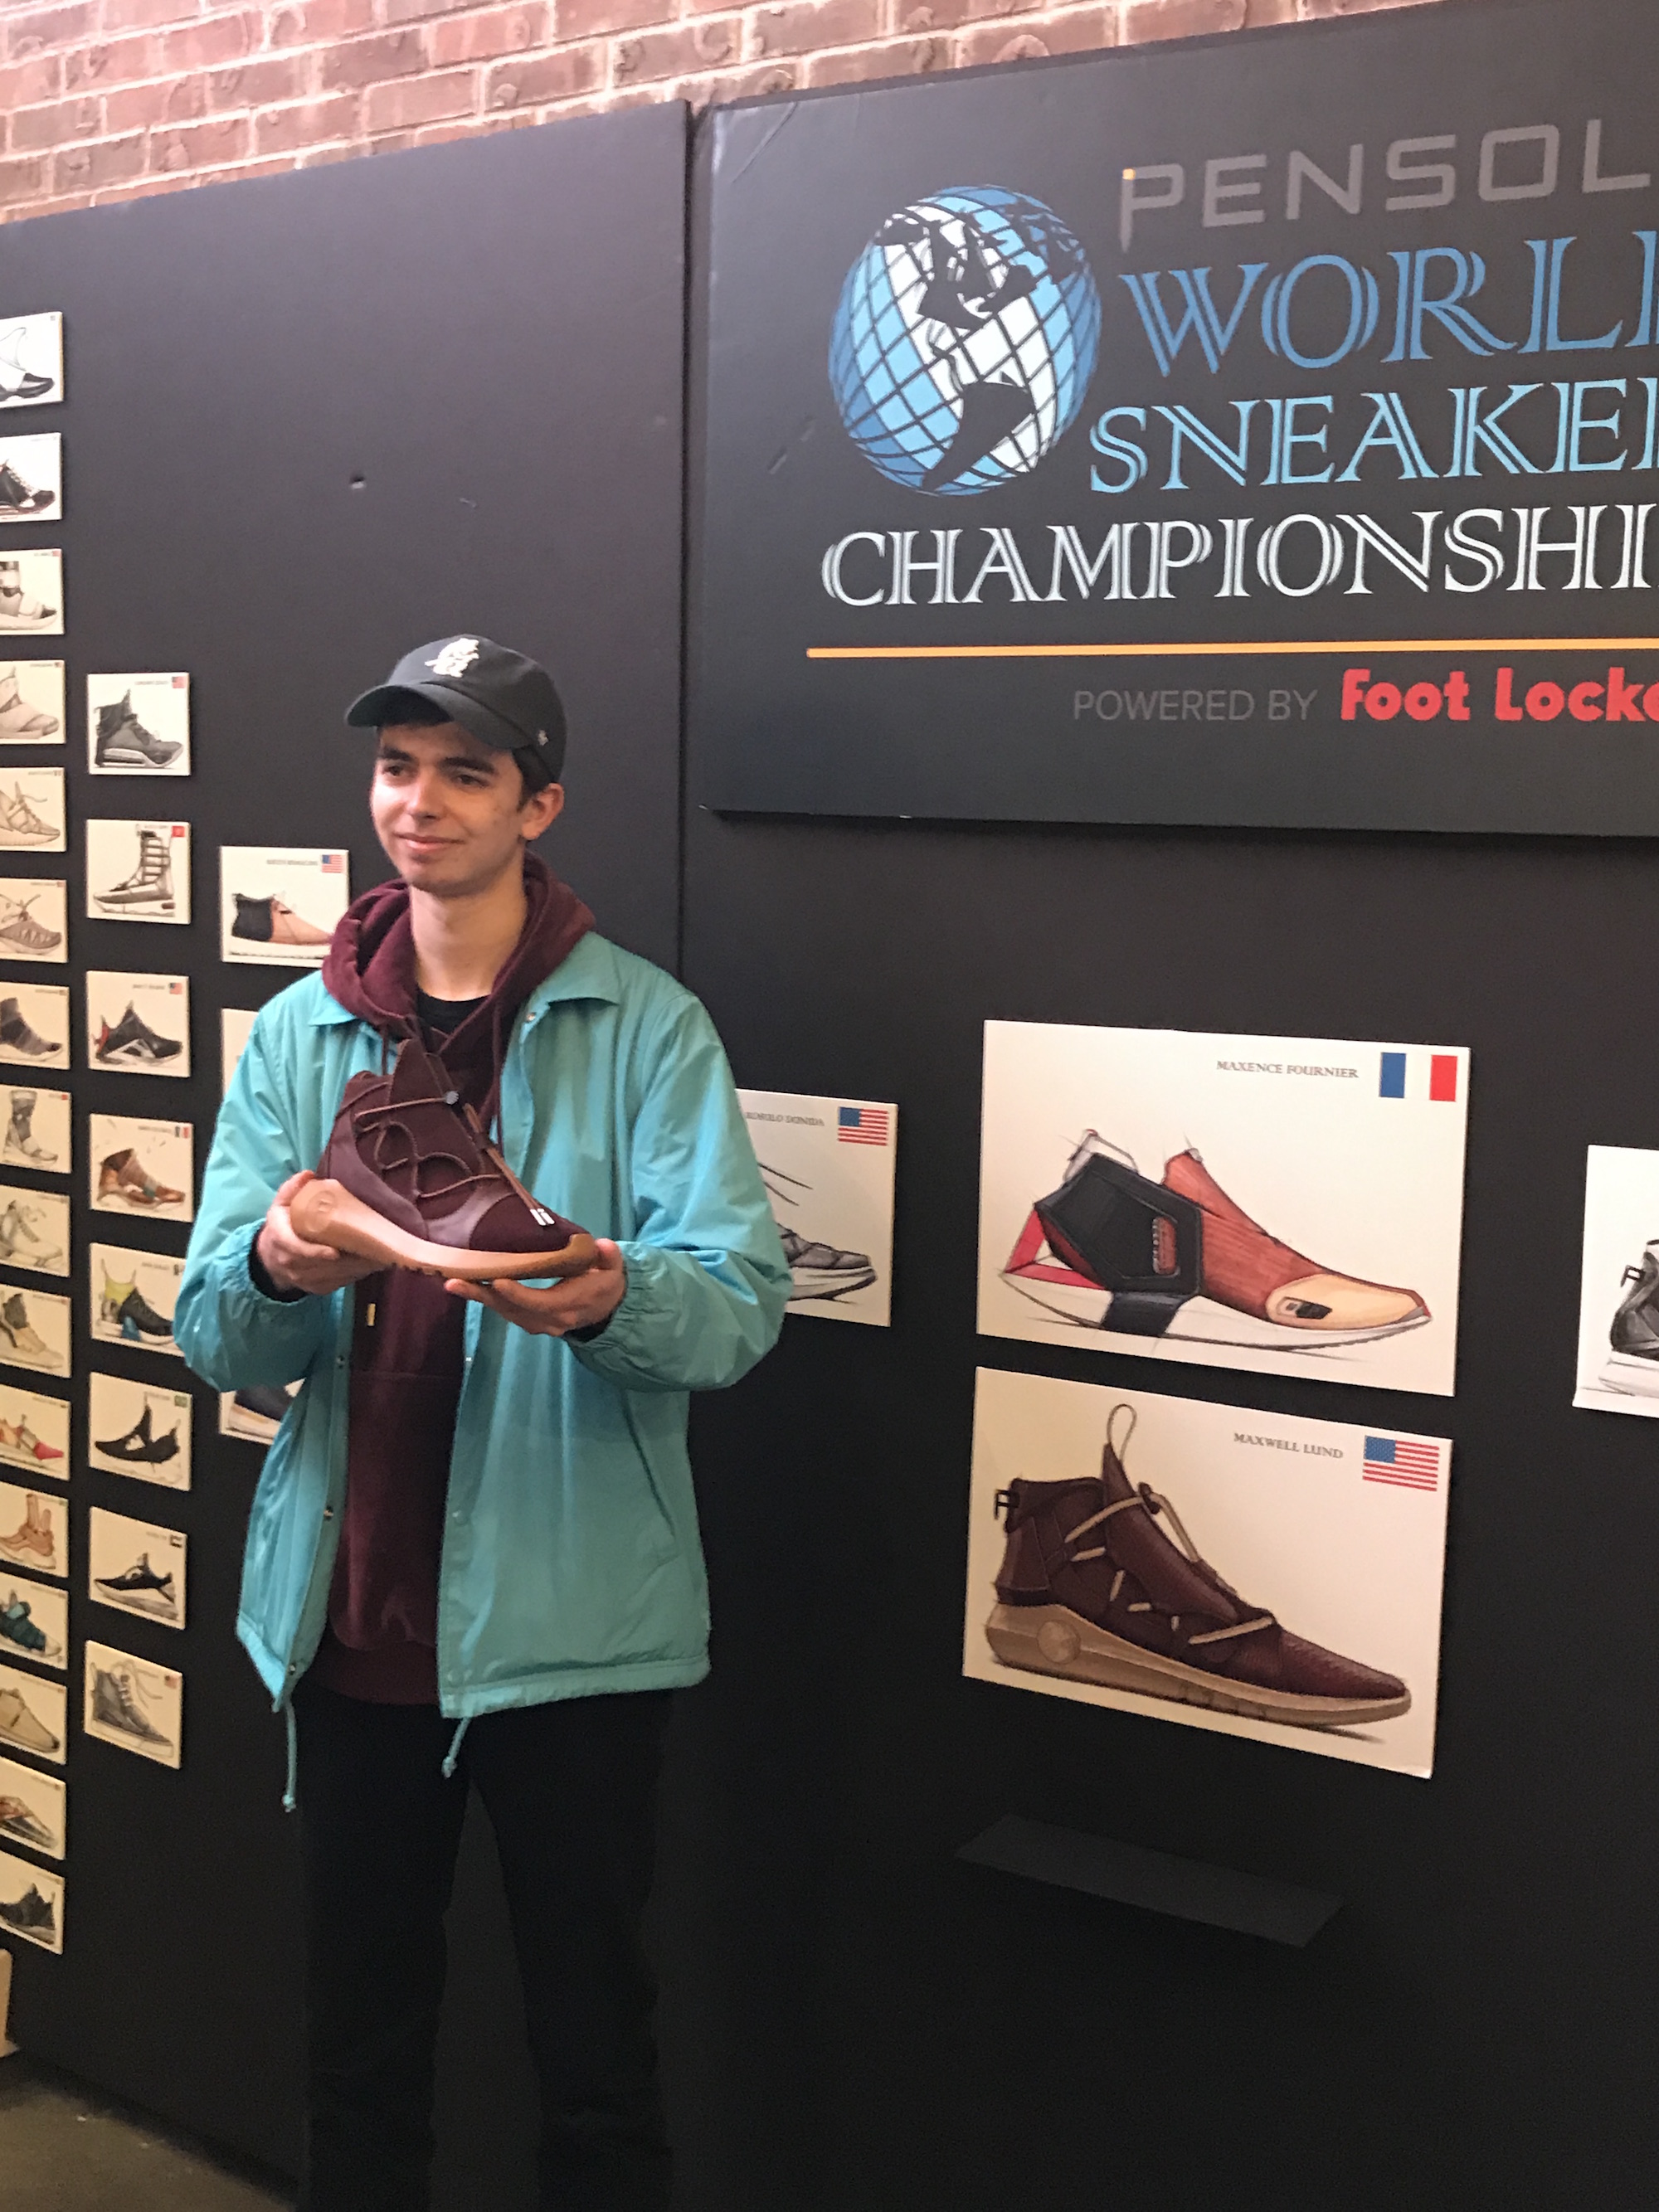 champion sneakers foot locker